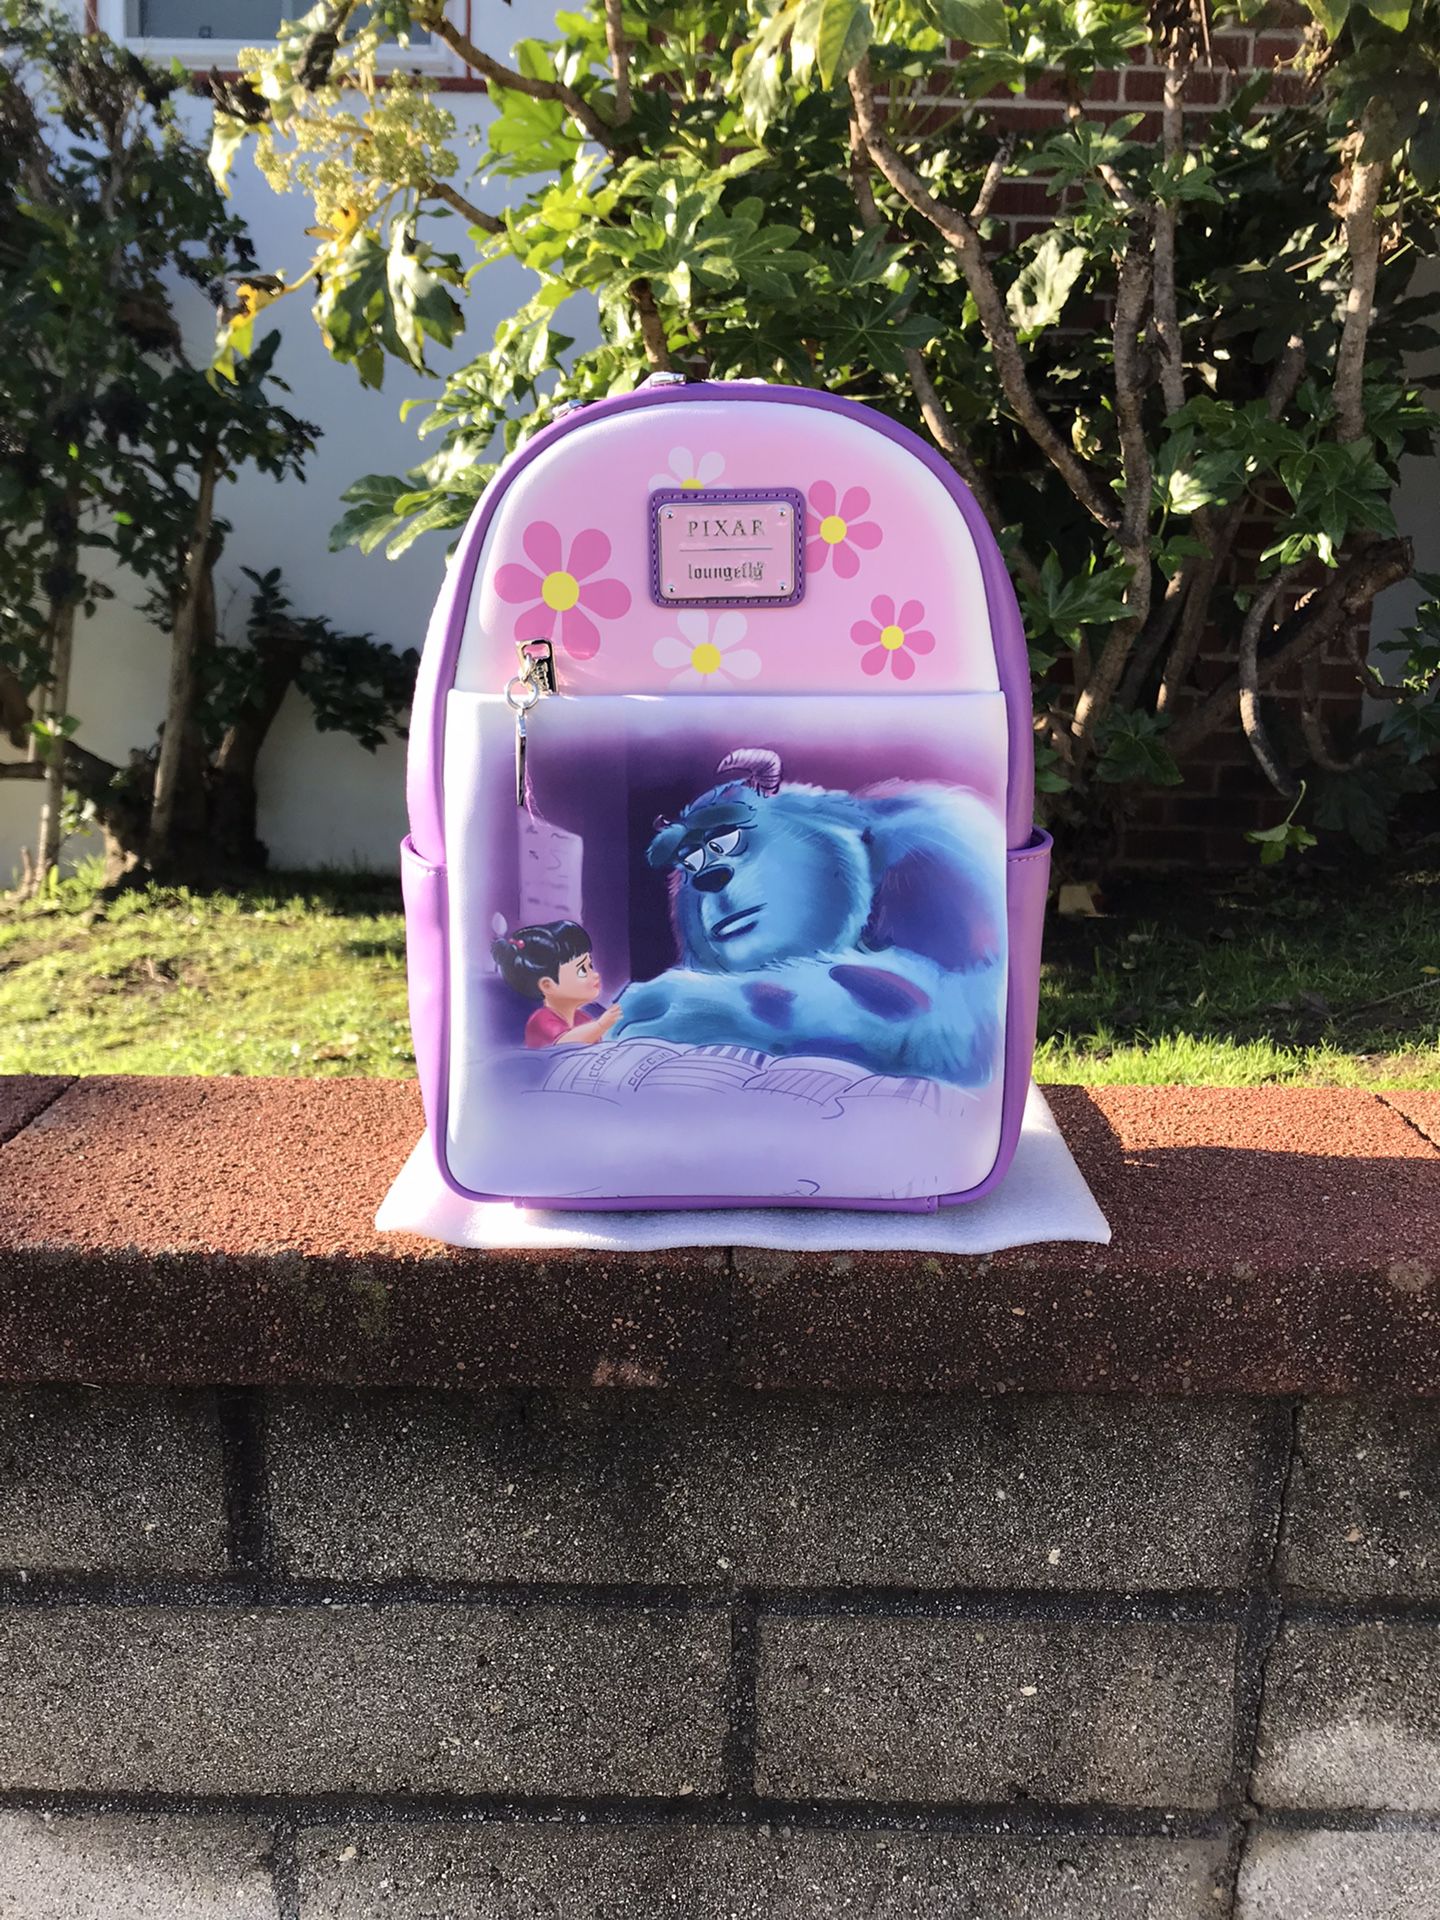 Disney Pixar Monsters, Inc. Boo Mini Backpack